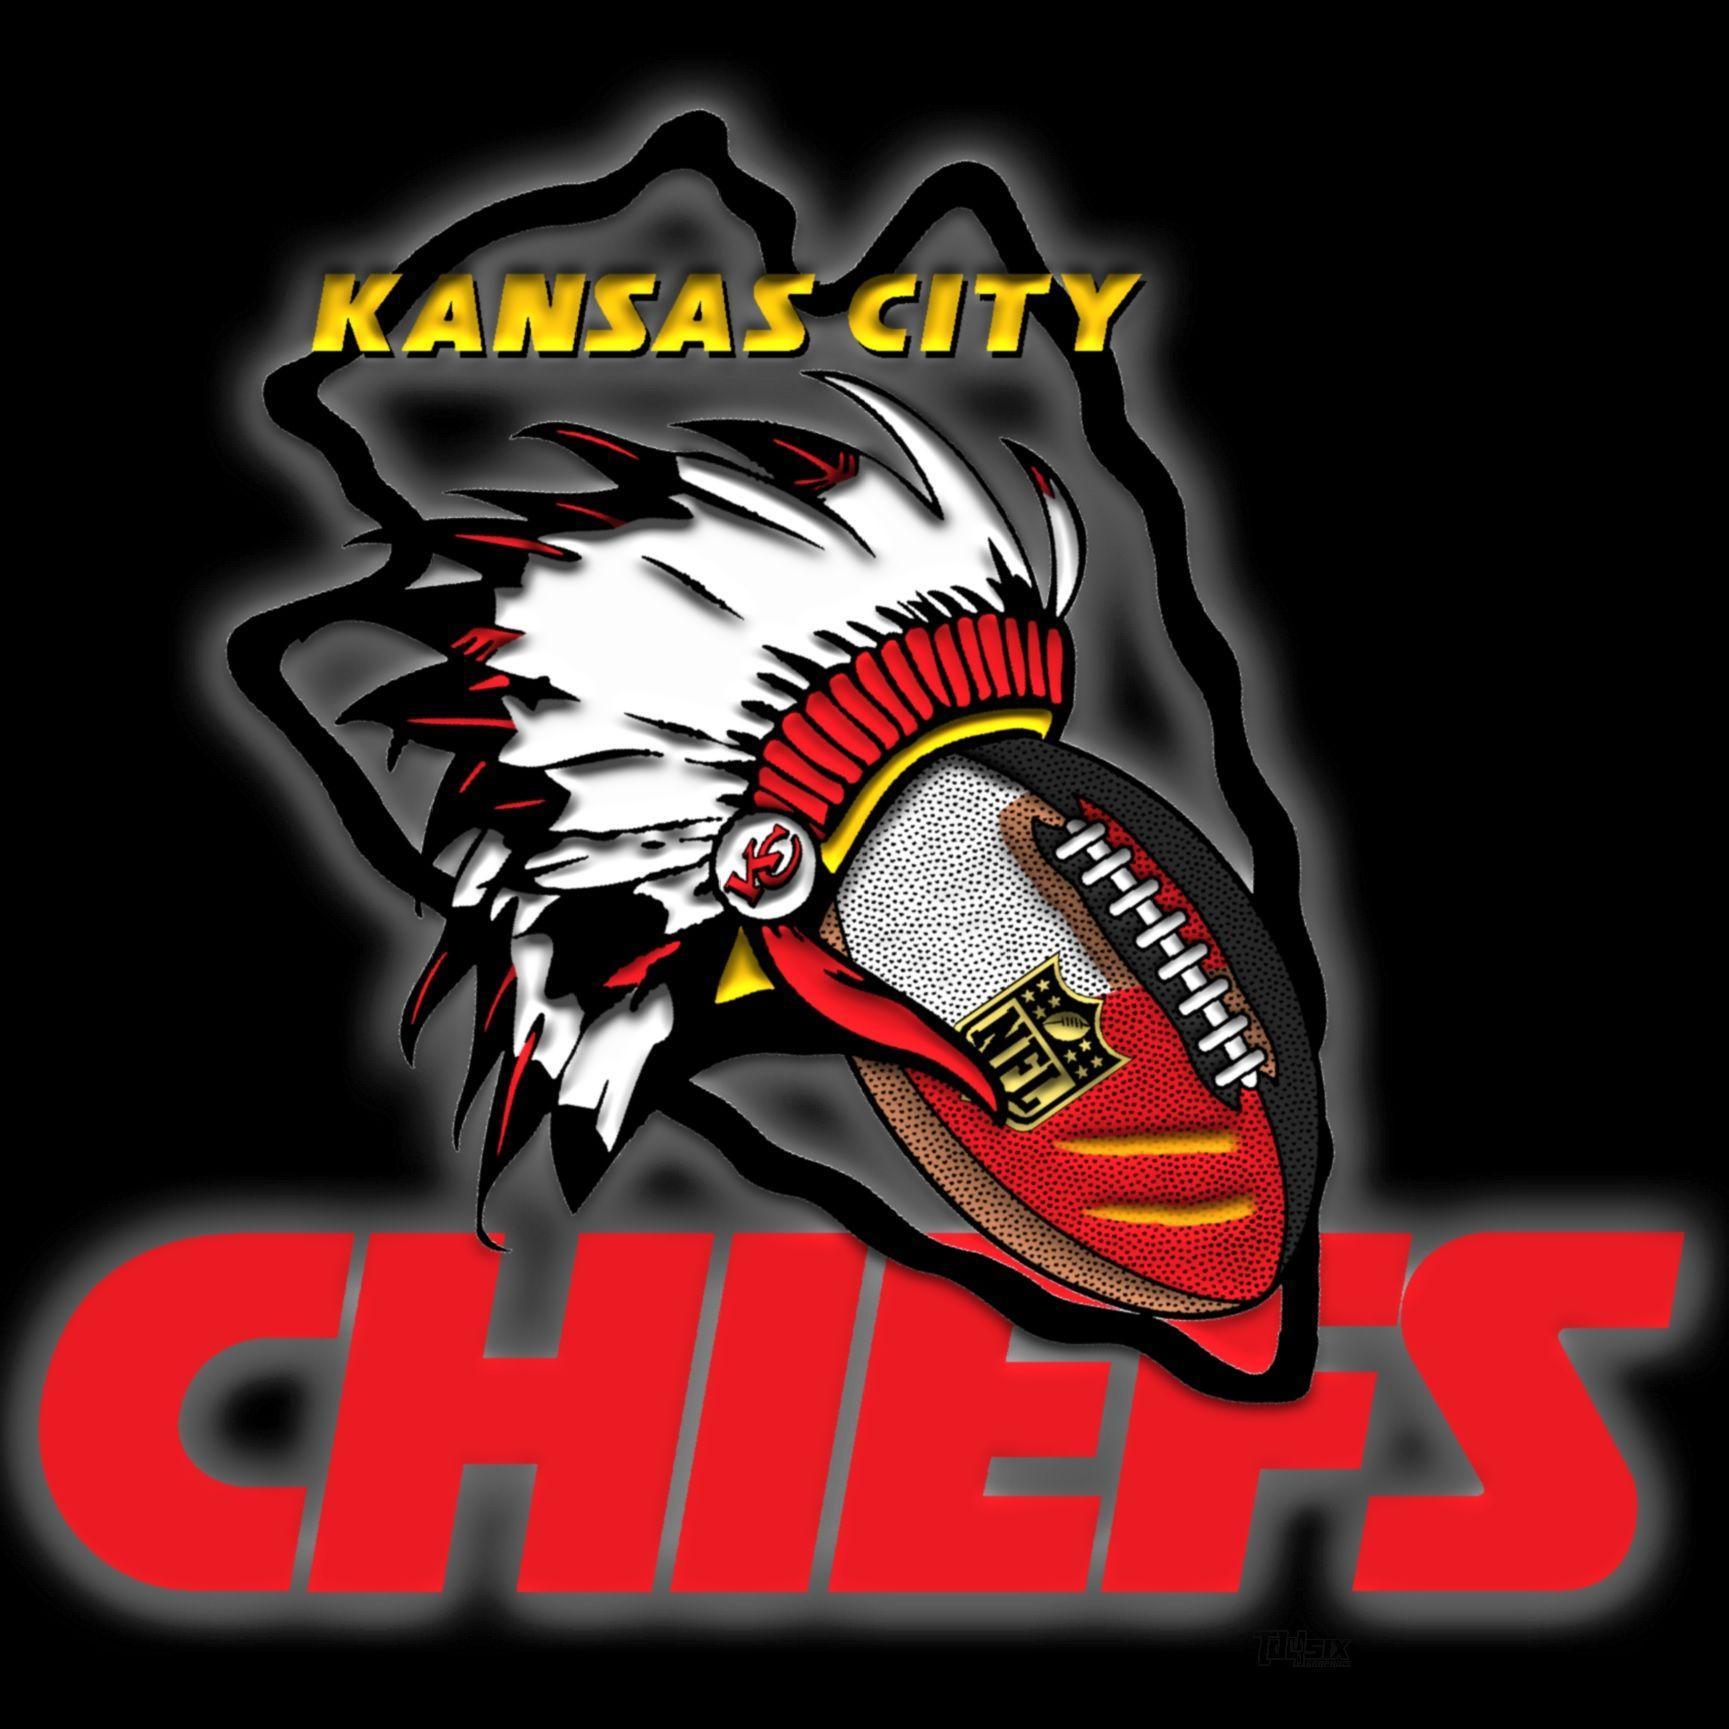 Kansas City Chiefs Logo ipad wallpaper Download